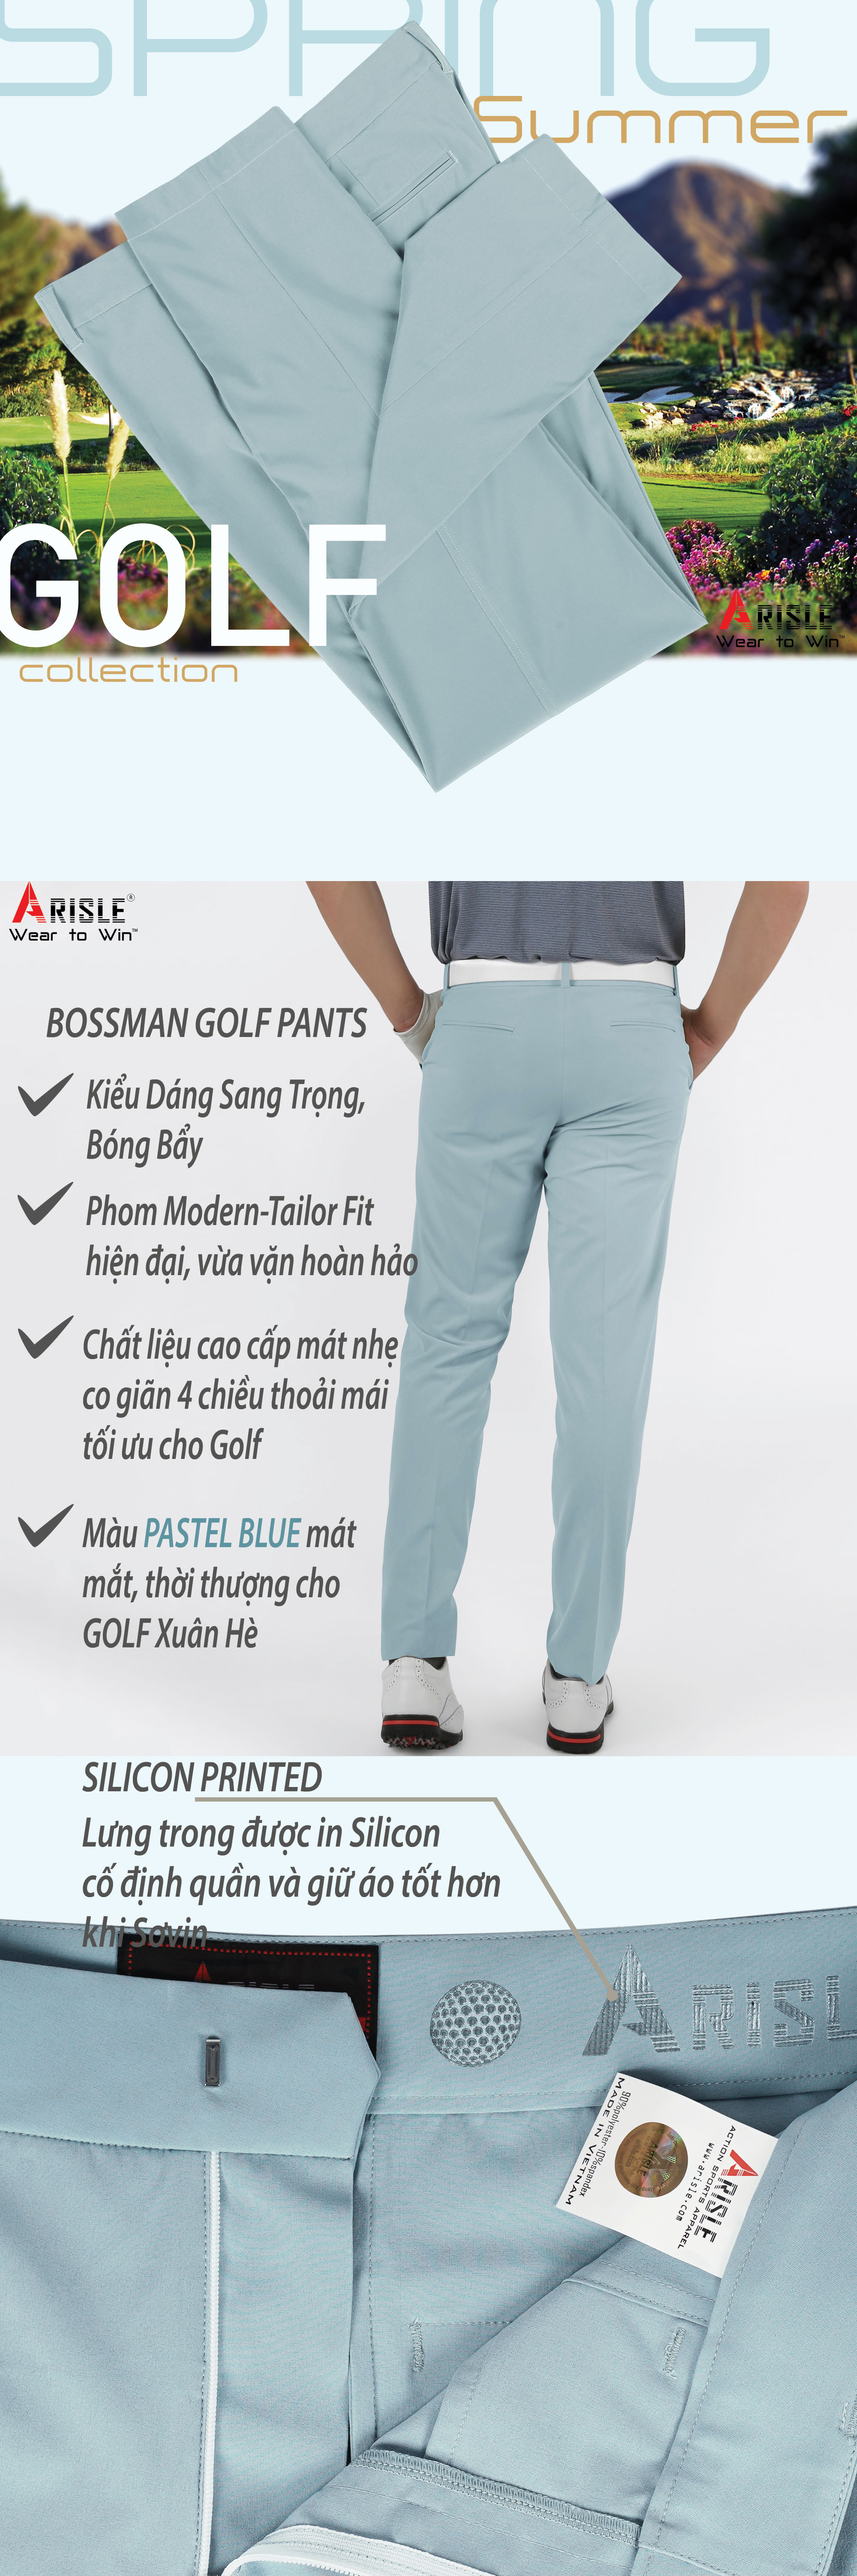 QuYn-Golf-ARISLE-Bossman-Pastel-Blue-info